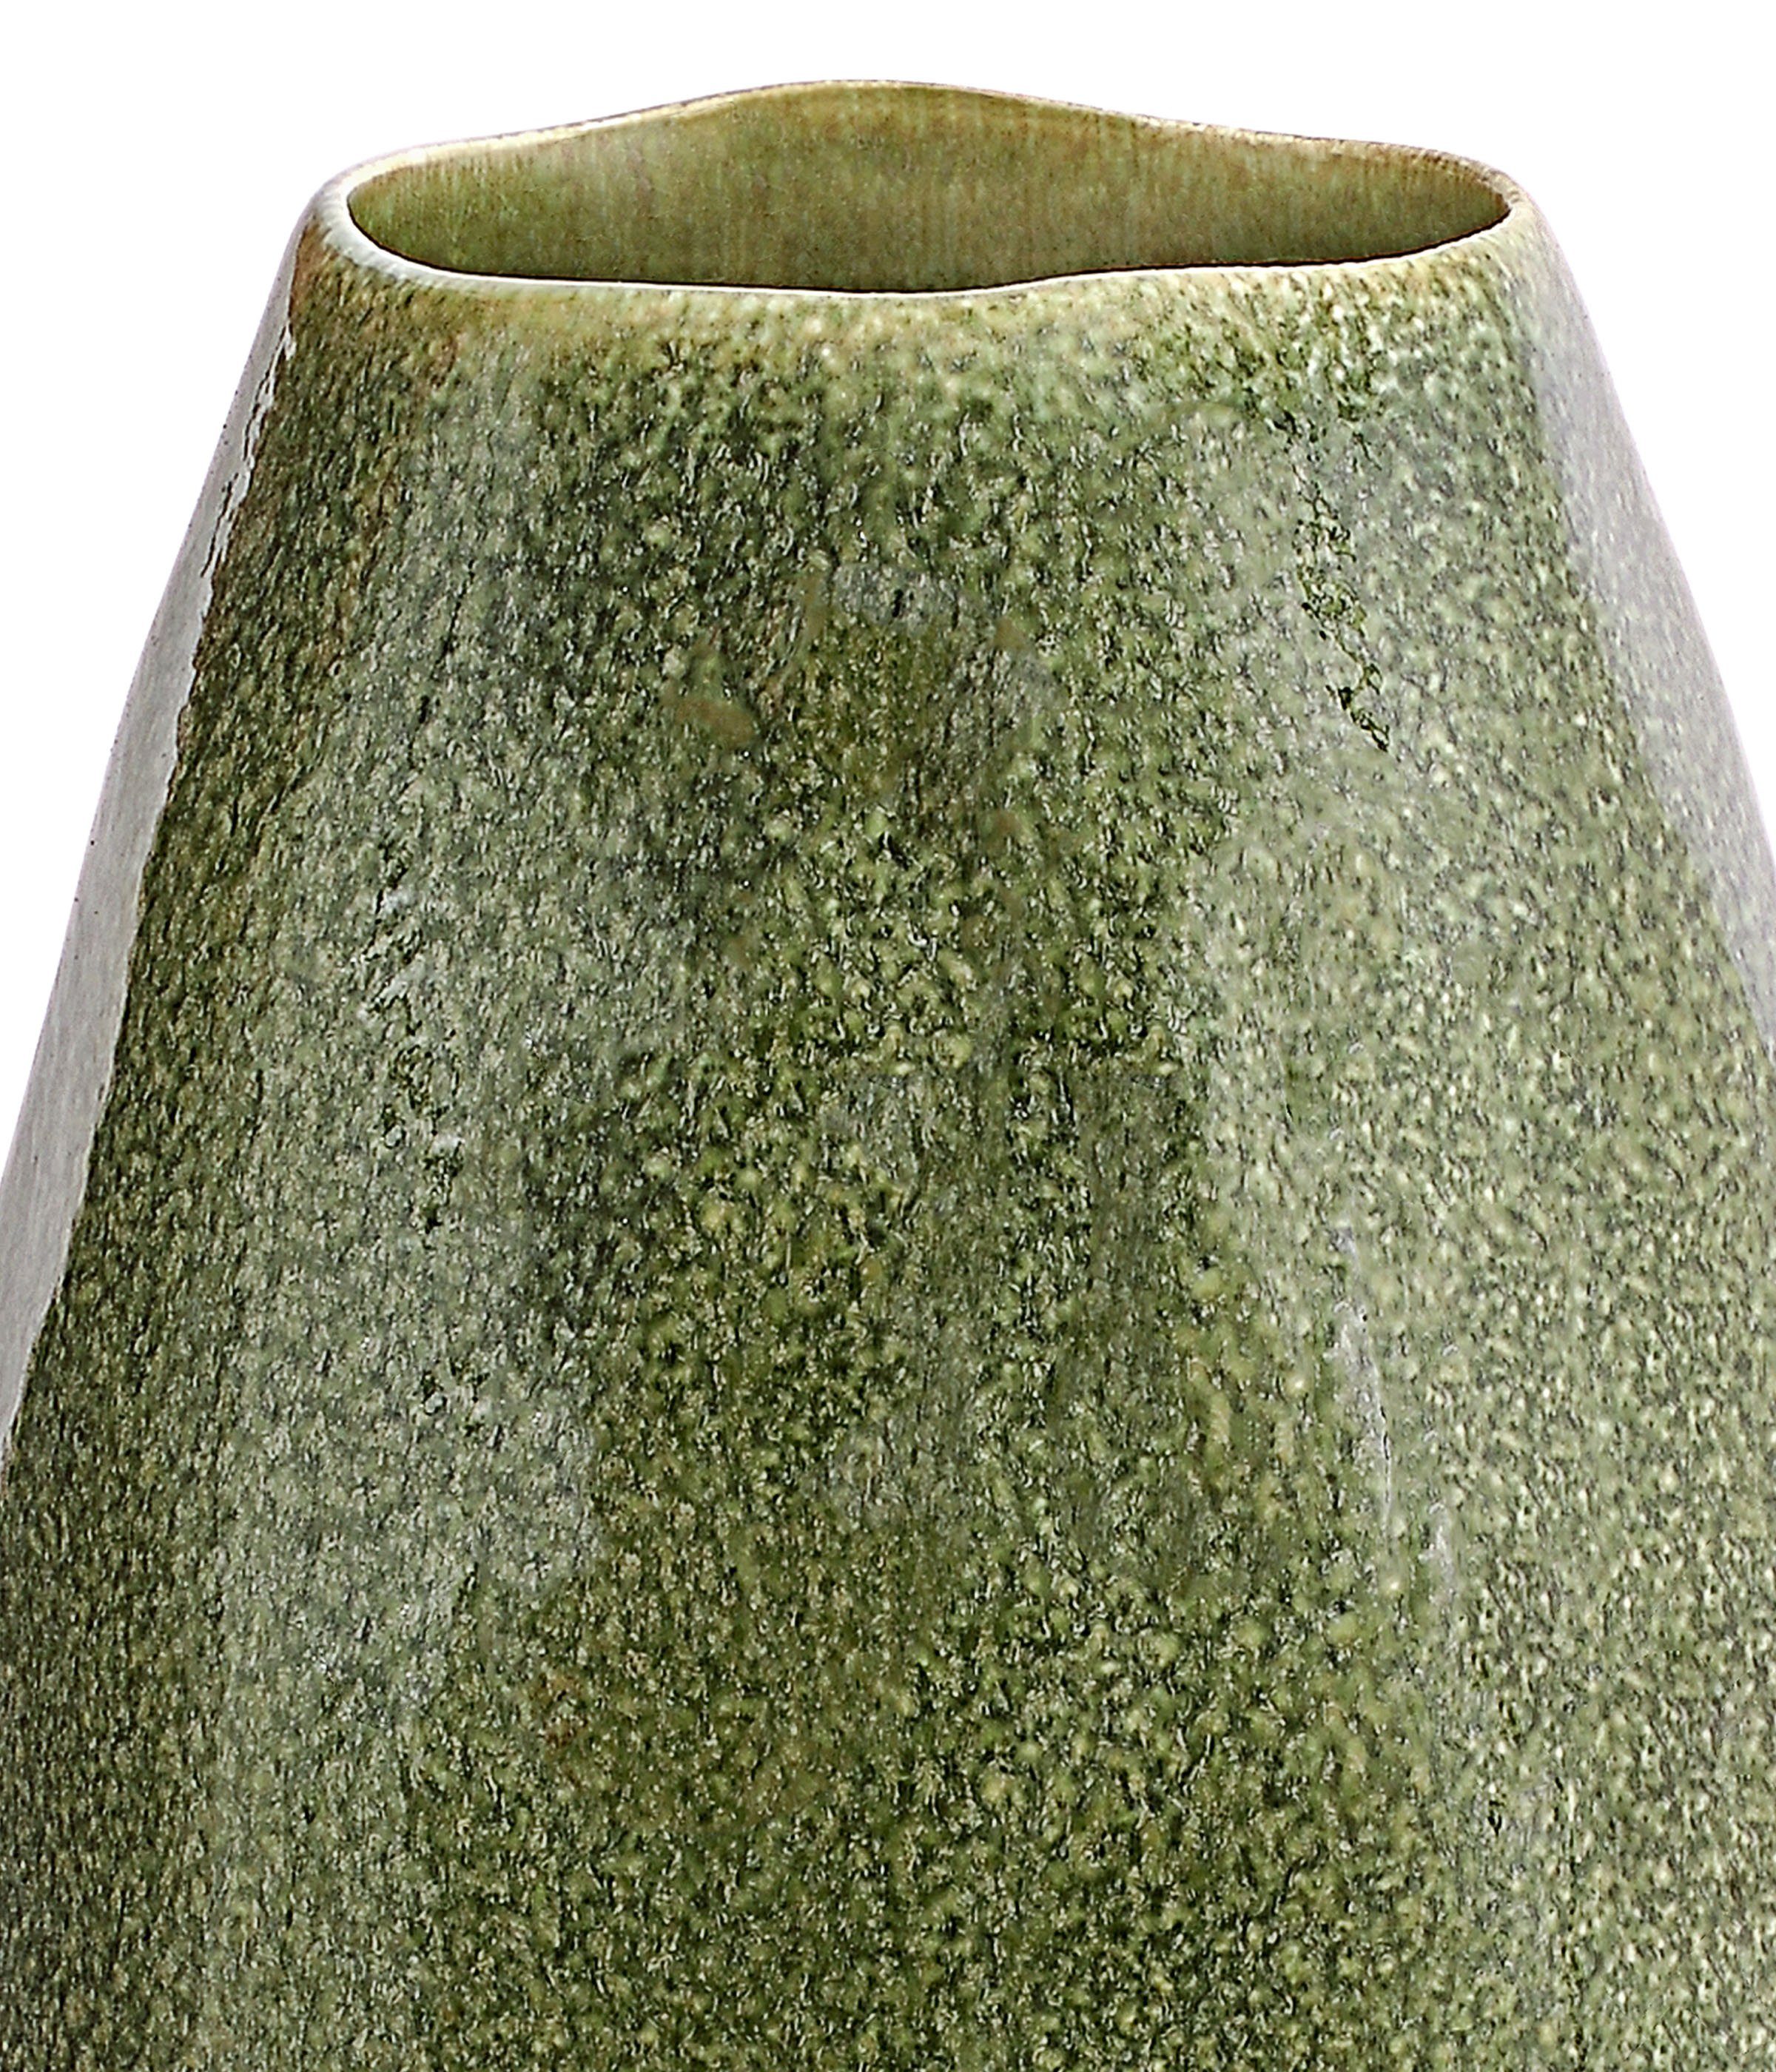 Übertopf dunkelgrün, Linn, Dehner Keramik, als Übertopf lasiert, handgefertige Blumenvase Vase oder